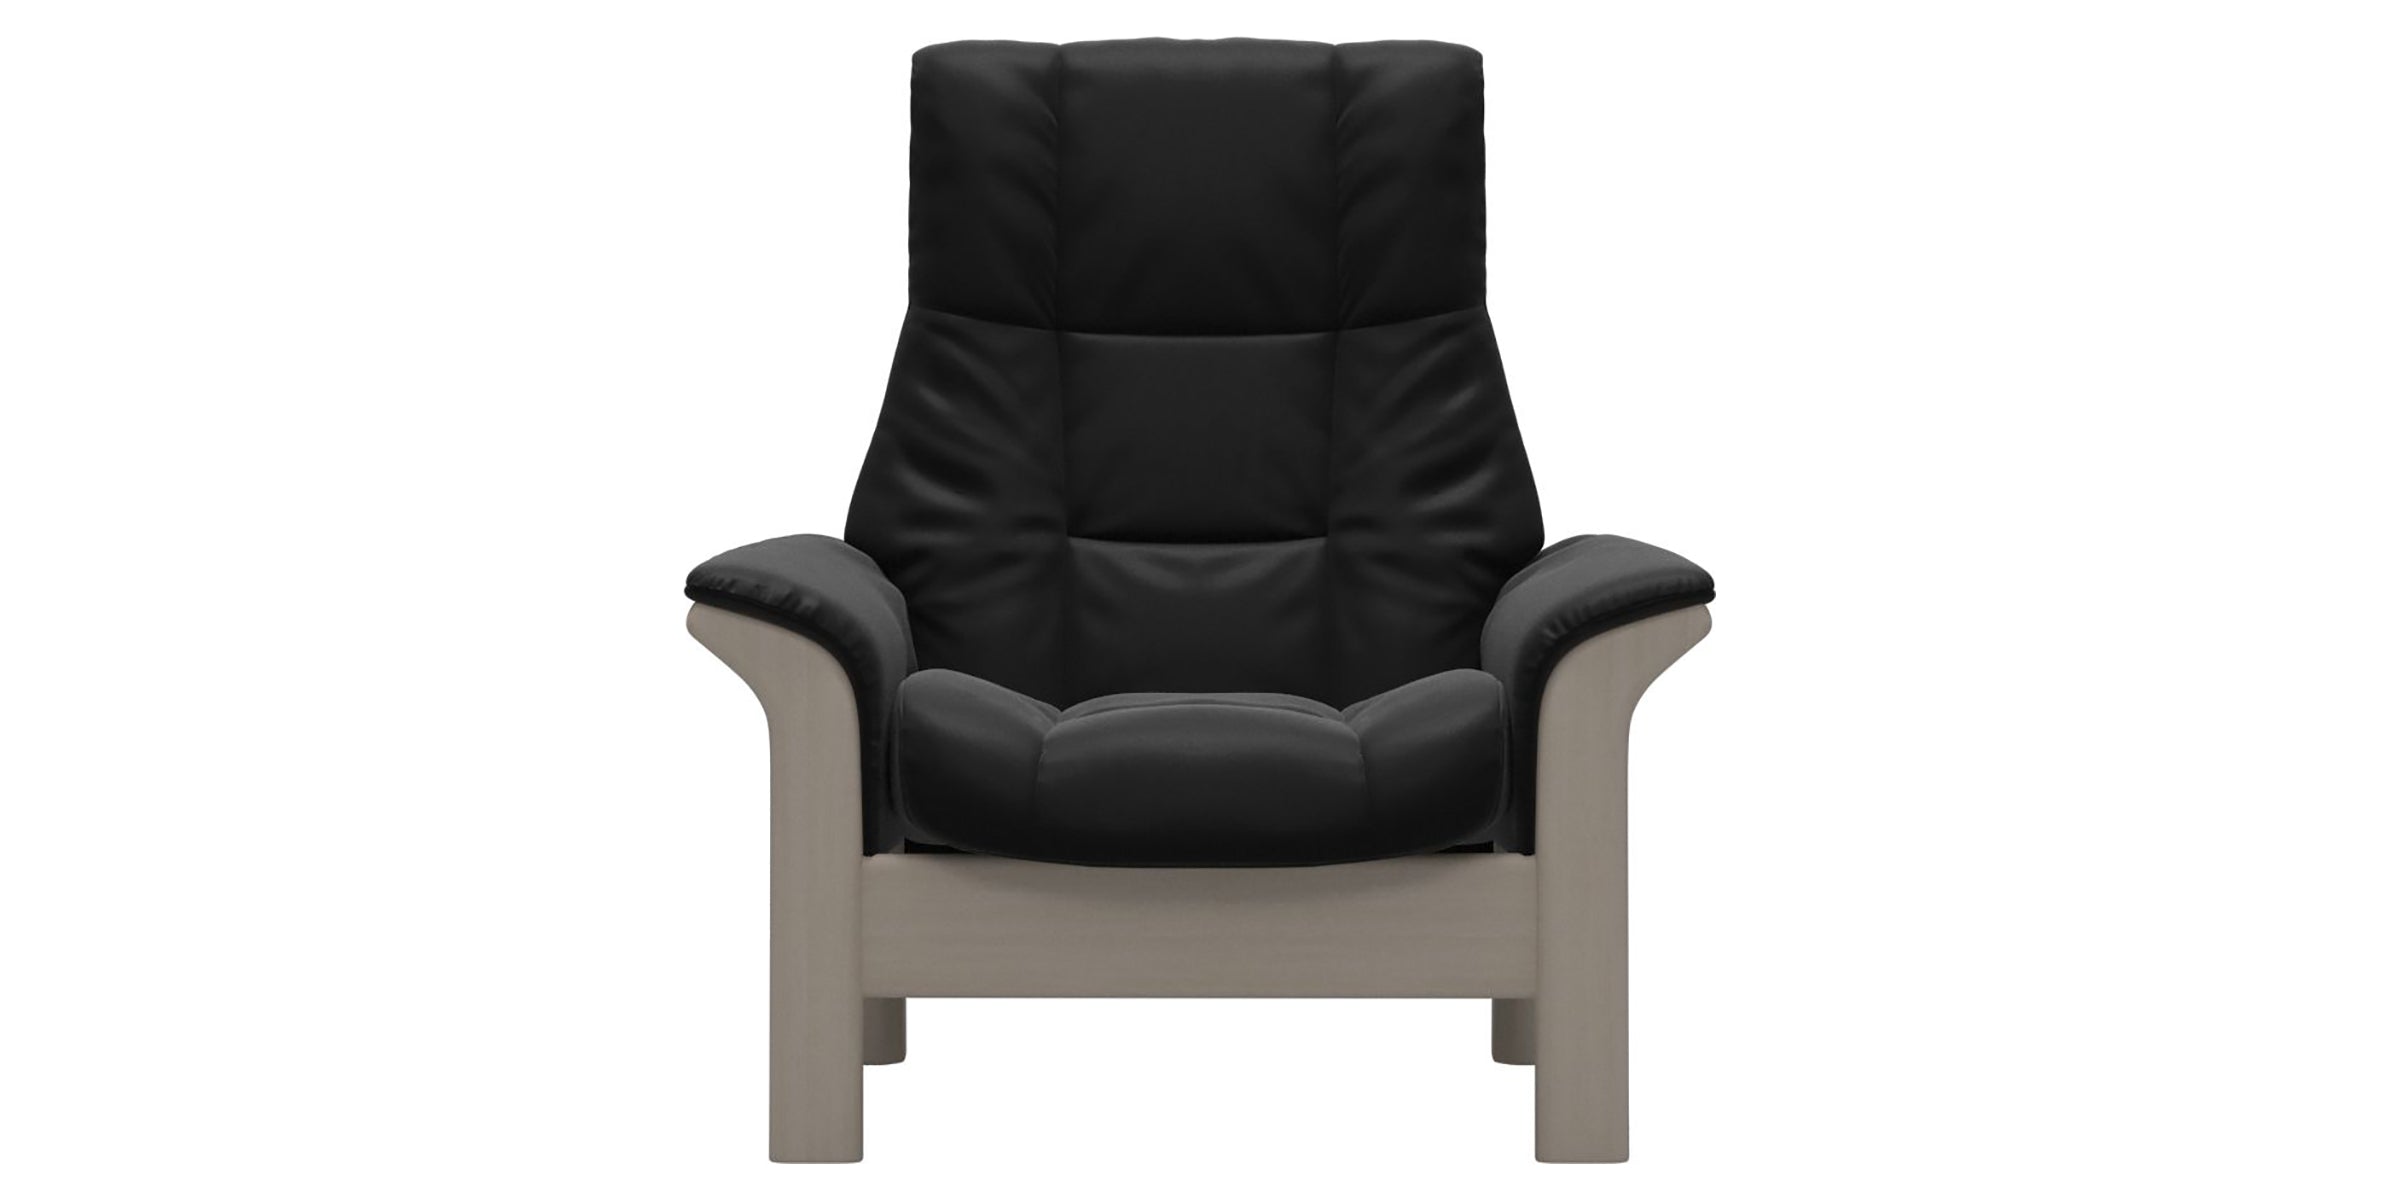 Paloma Leather Black and Whitewash Base | Stressless Windsor High Back Chair | Valley Ridge Furniture